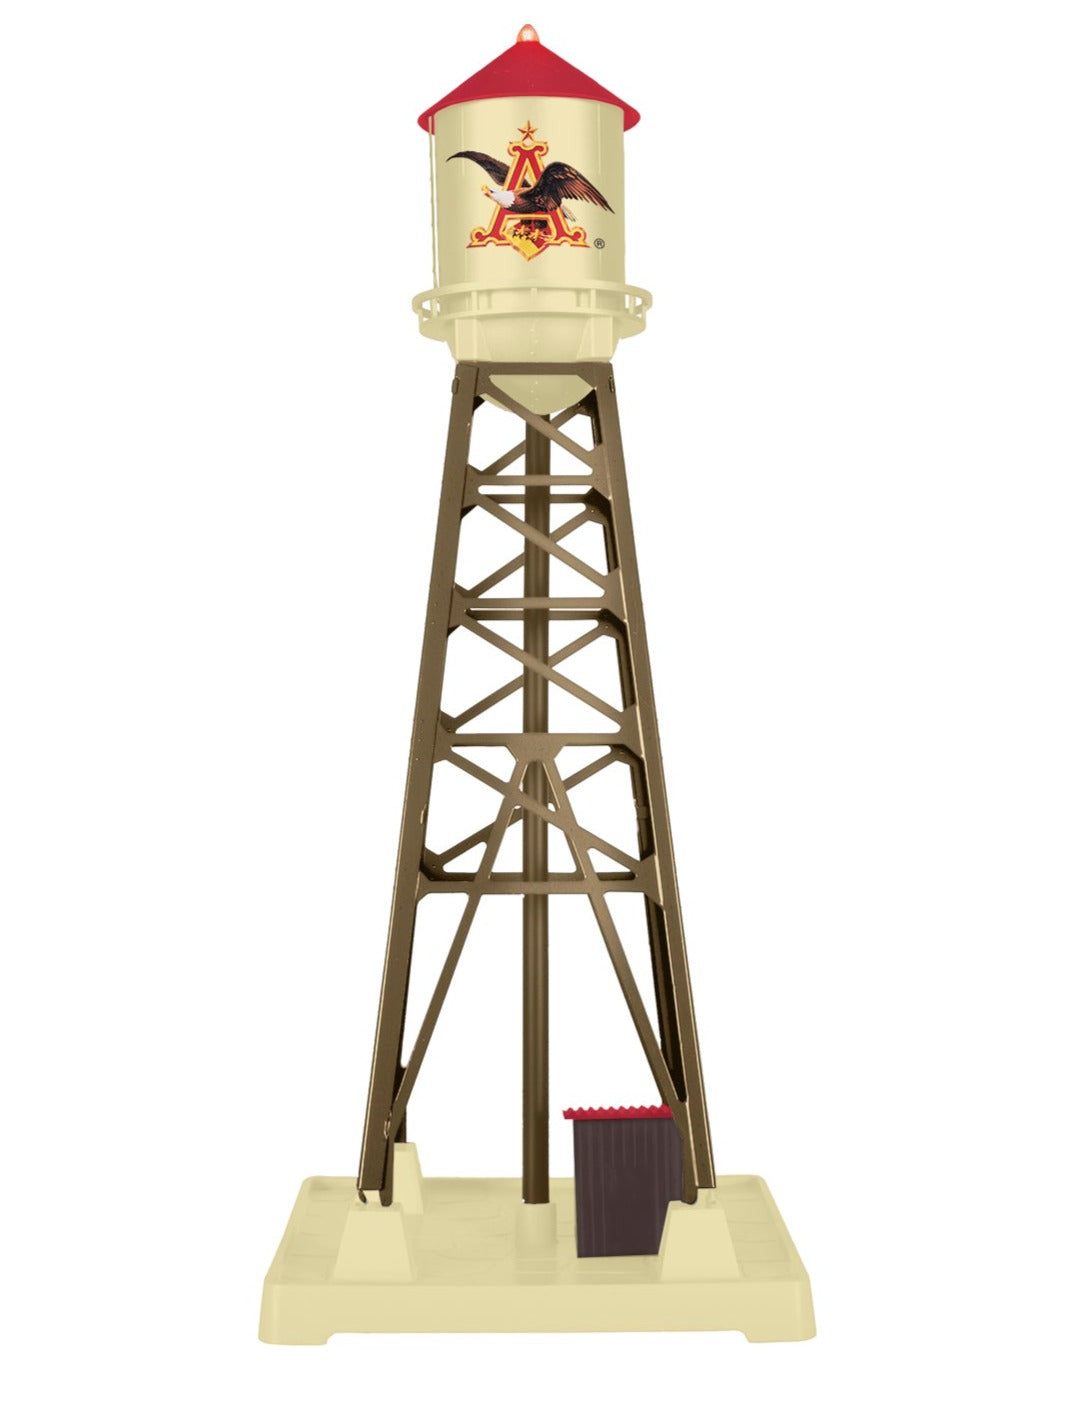 Lionel 2429140 - Anheuser-Busch - Industrial Water Tower